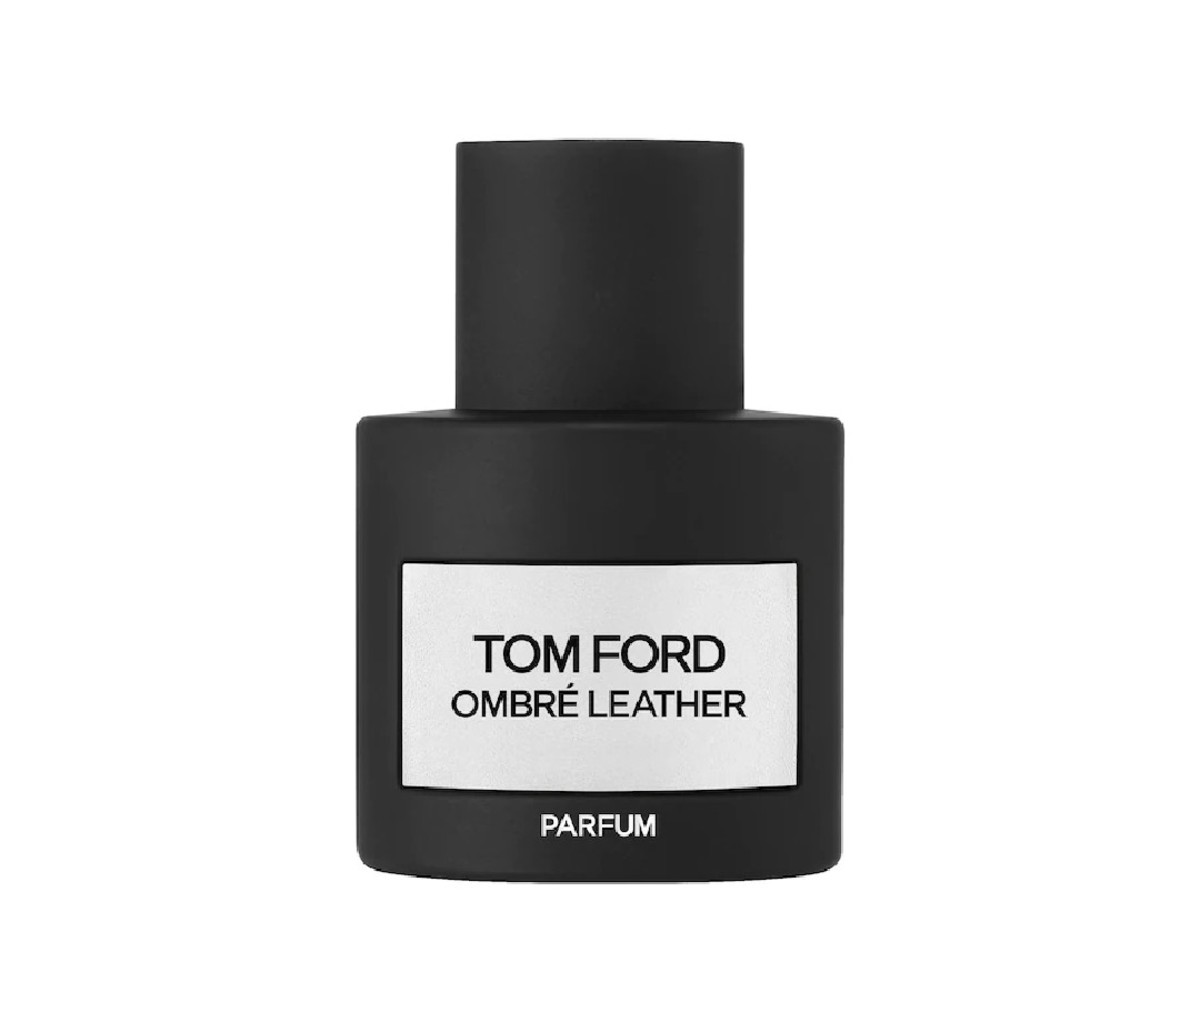 A bottle of Tom Ford Ombré Leather Parfum.